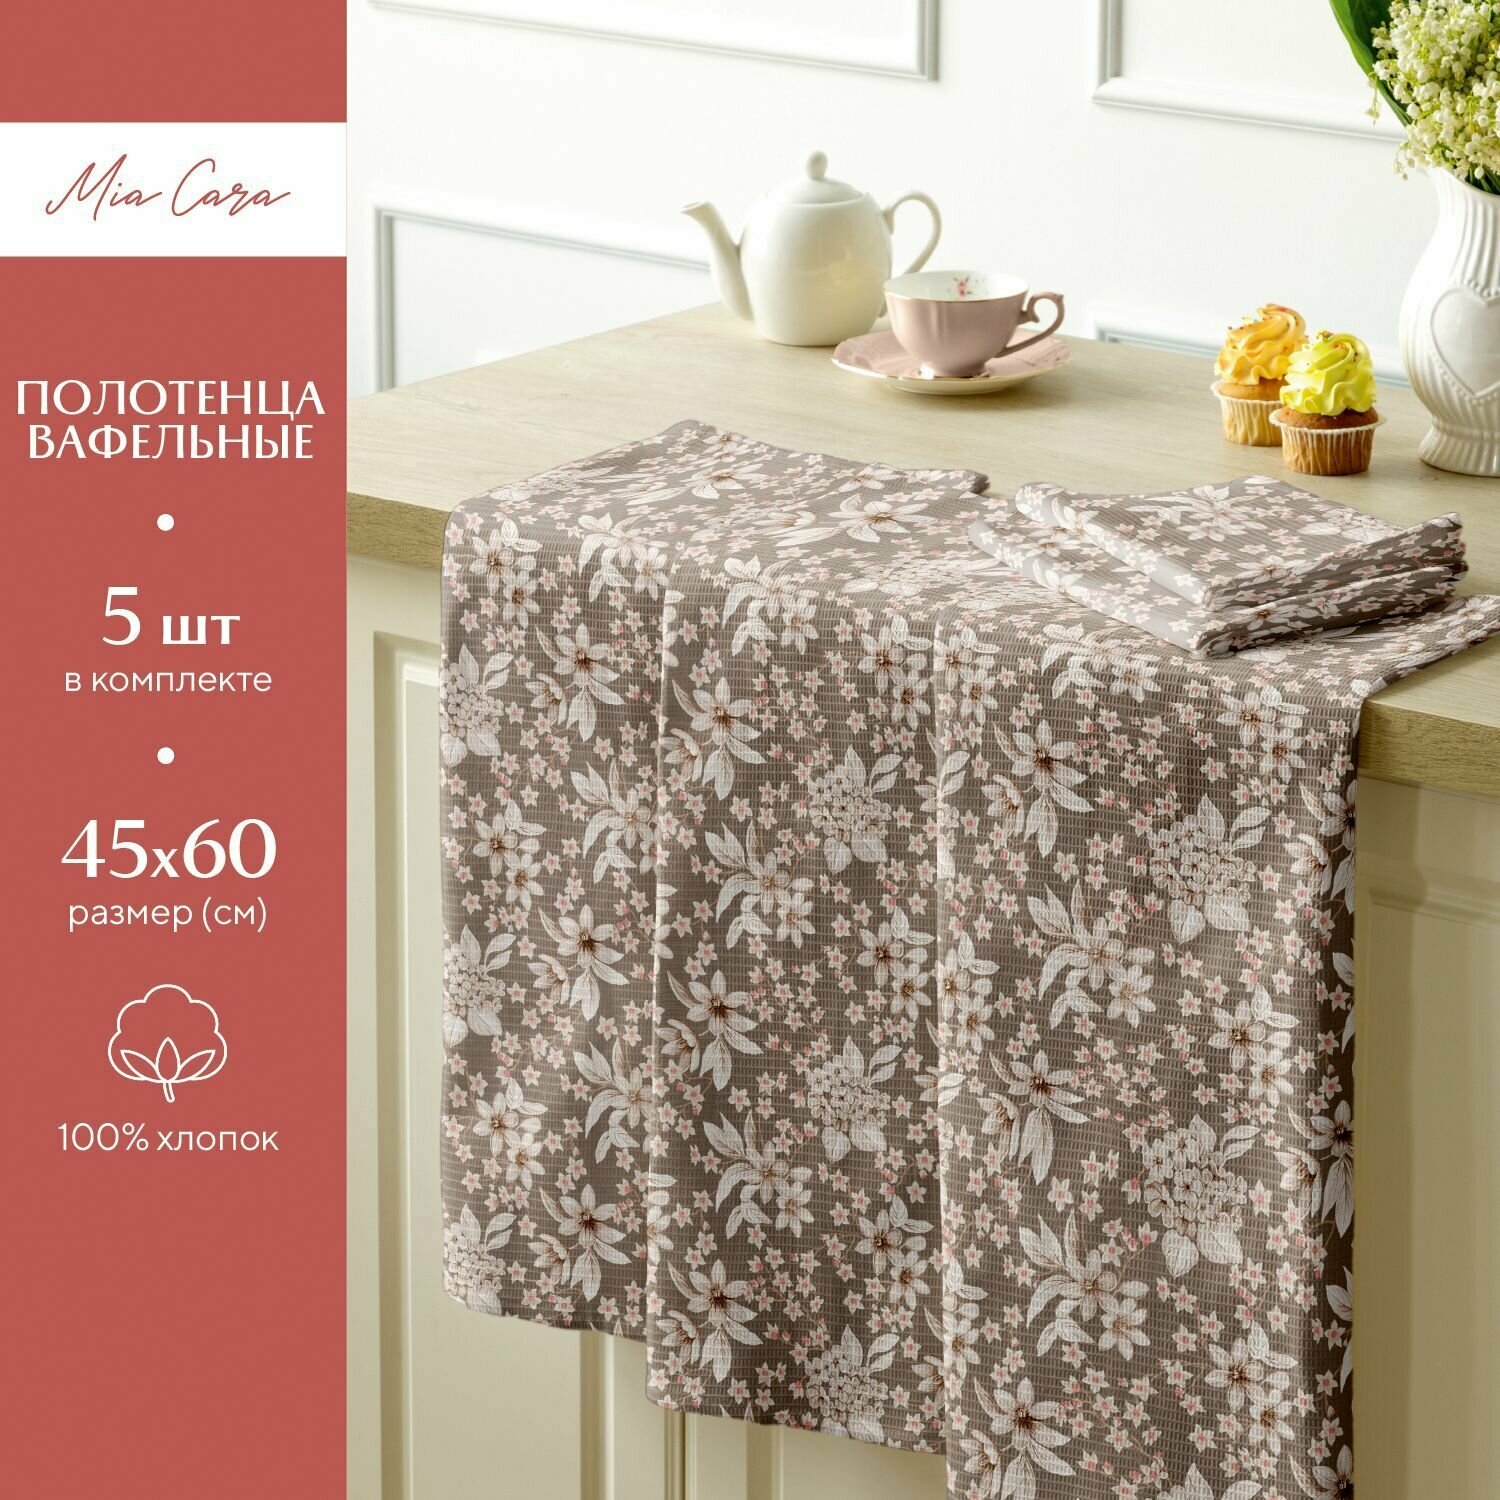 Набор вафельных полотенец 45х60 (5 шт.) "Mia Cara" рис 30564-1 Croisette